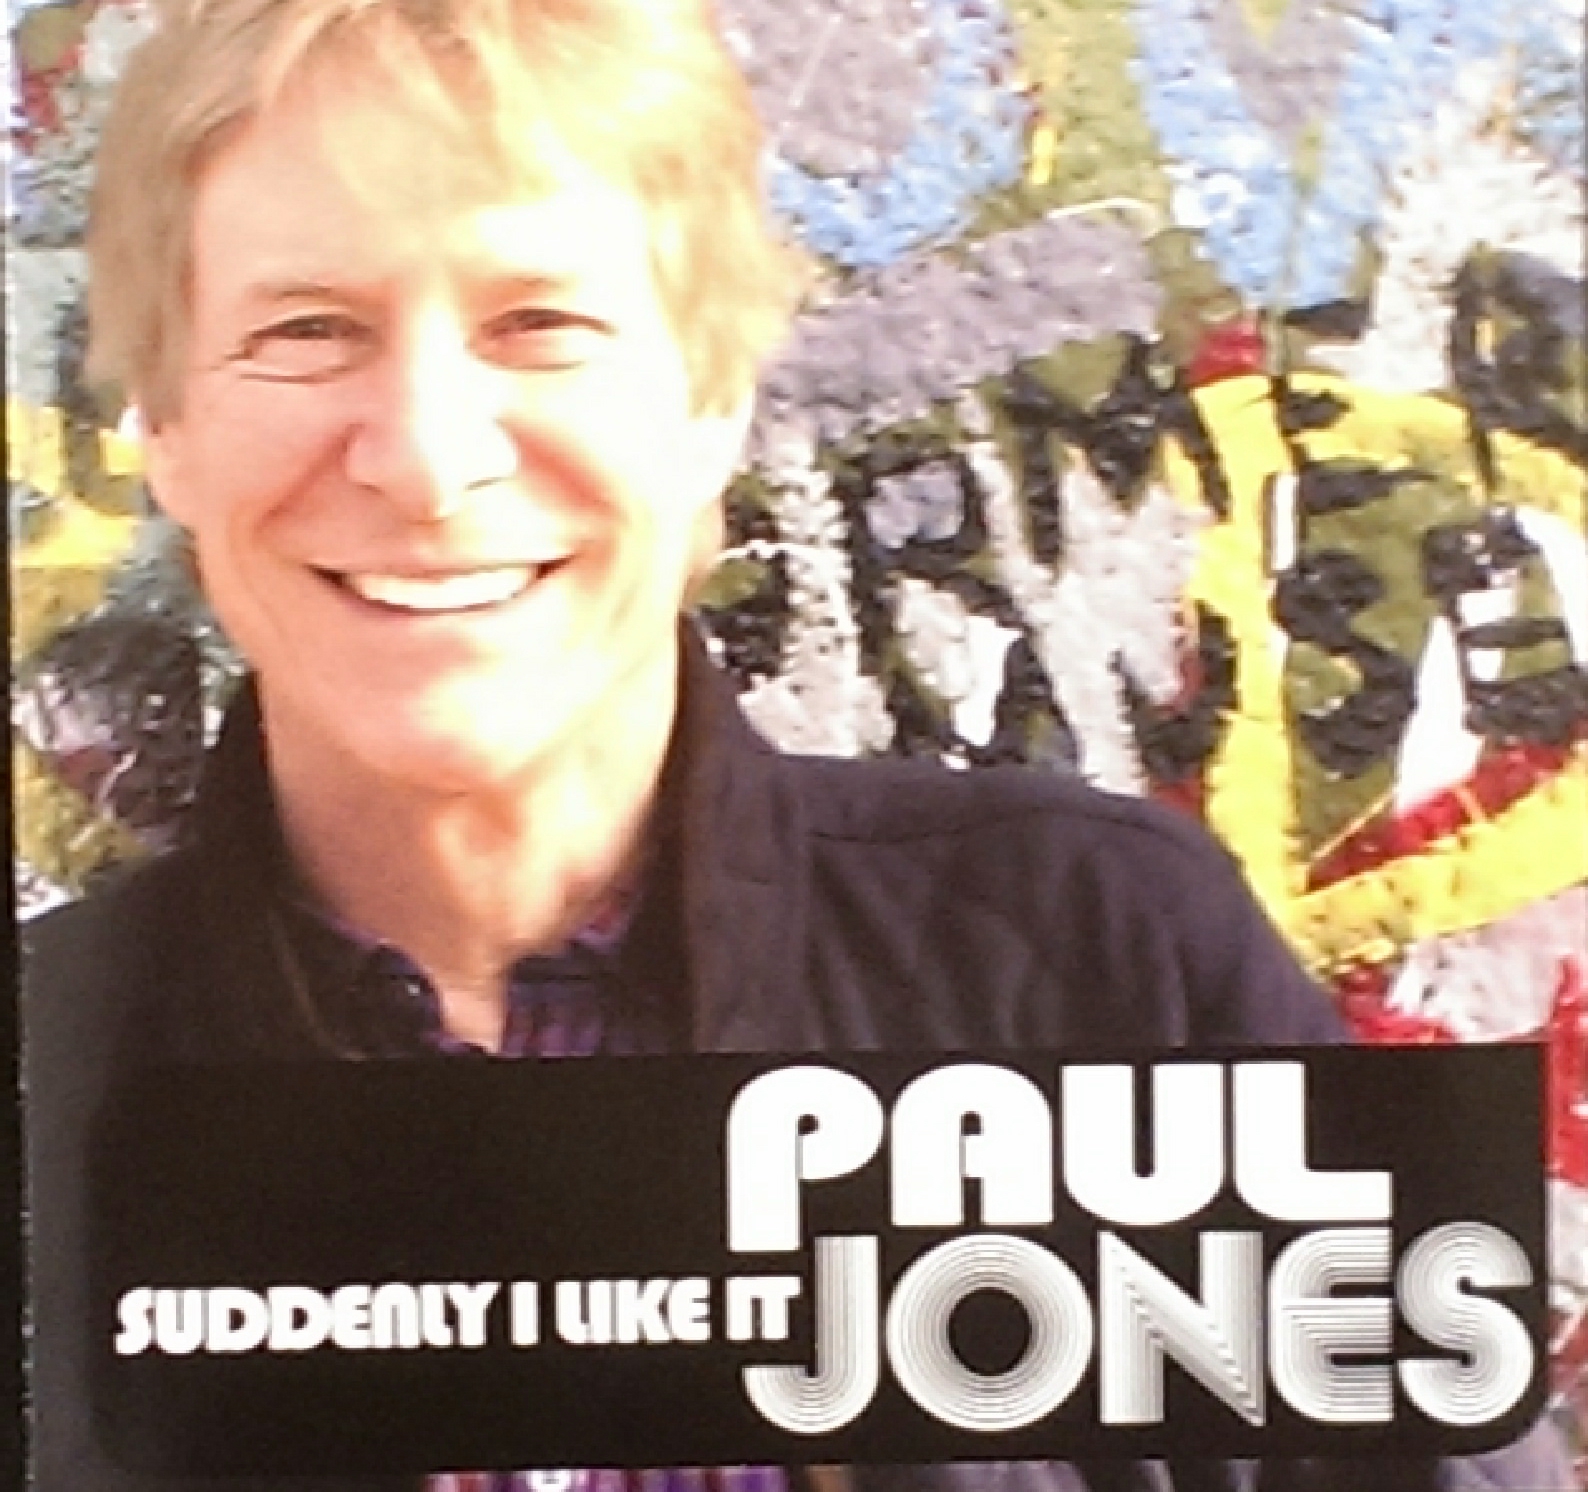 *NEW* Paul Jones \'Suddenly I Like It\'